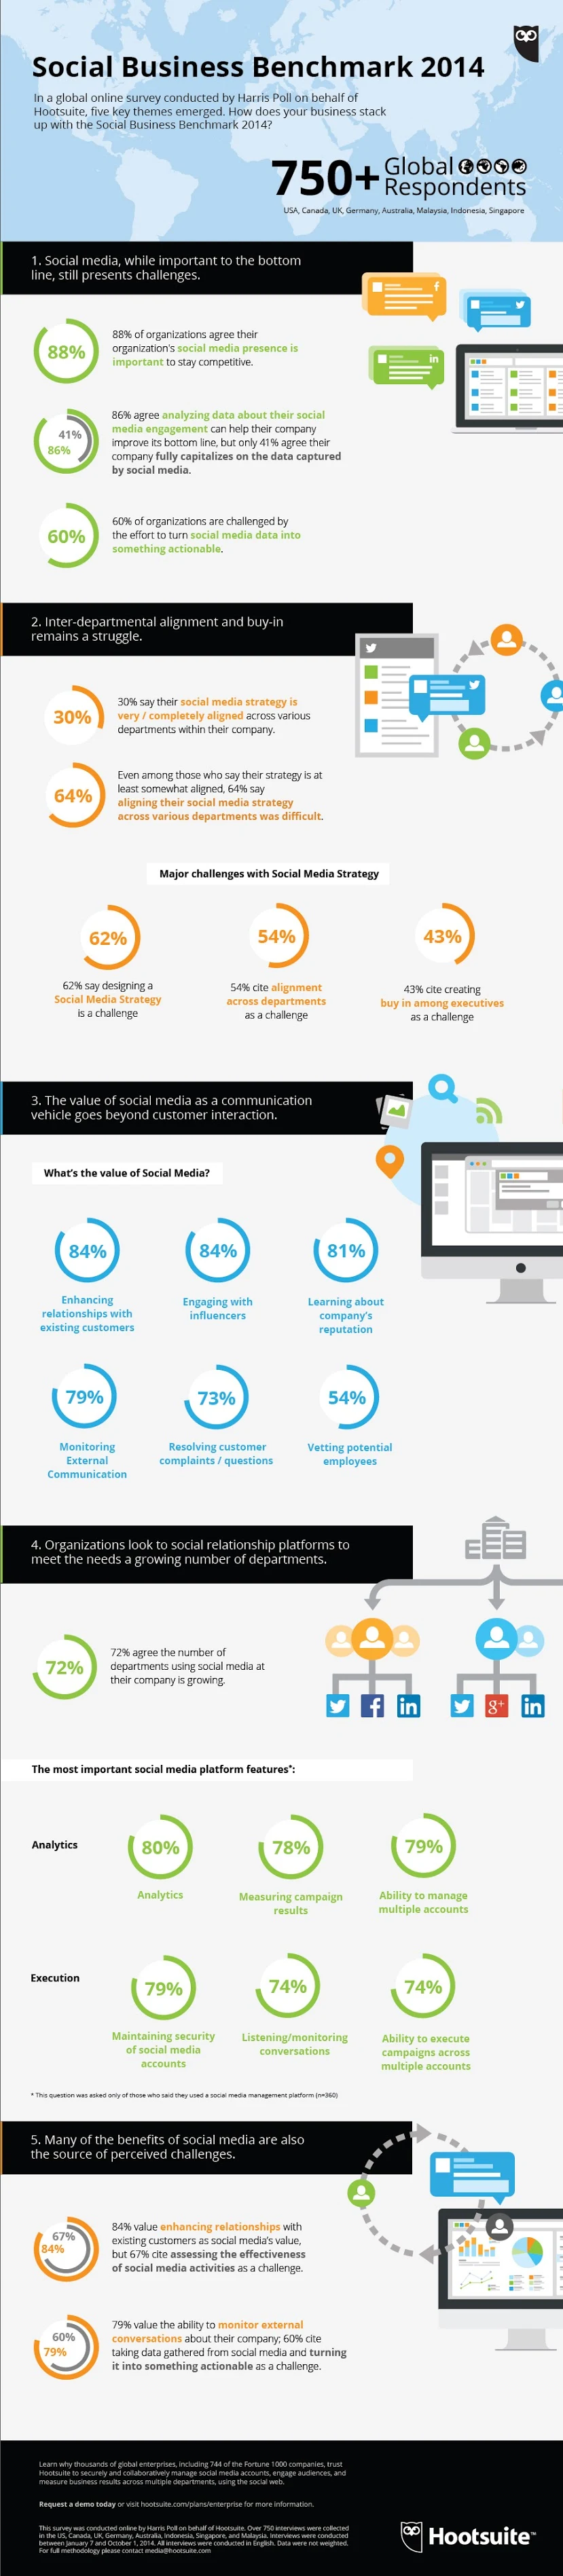 Hootsuite Announces Social Business Benchmark 2014 #infographic #marketing